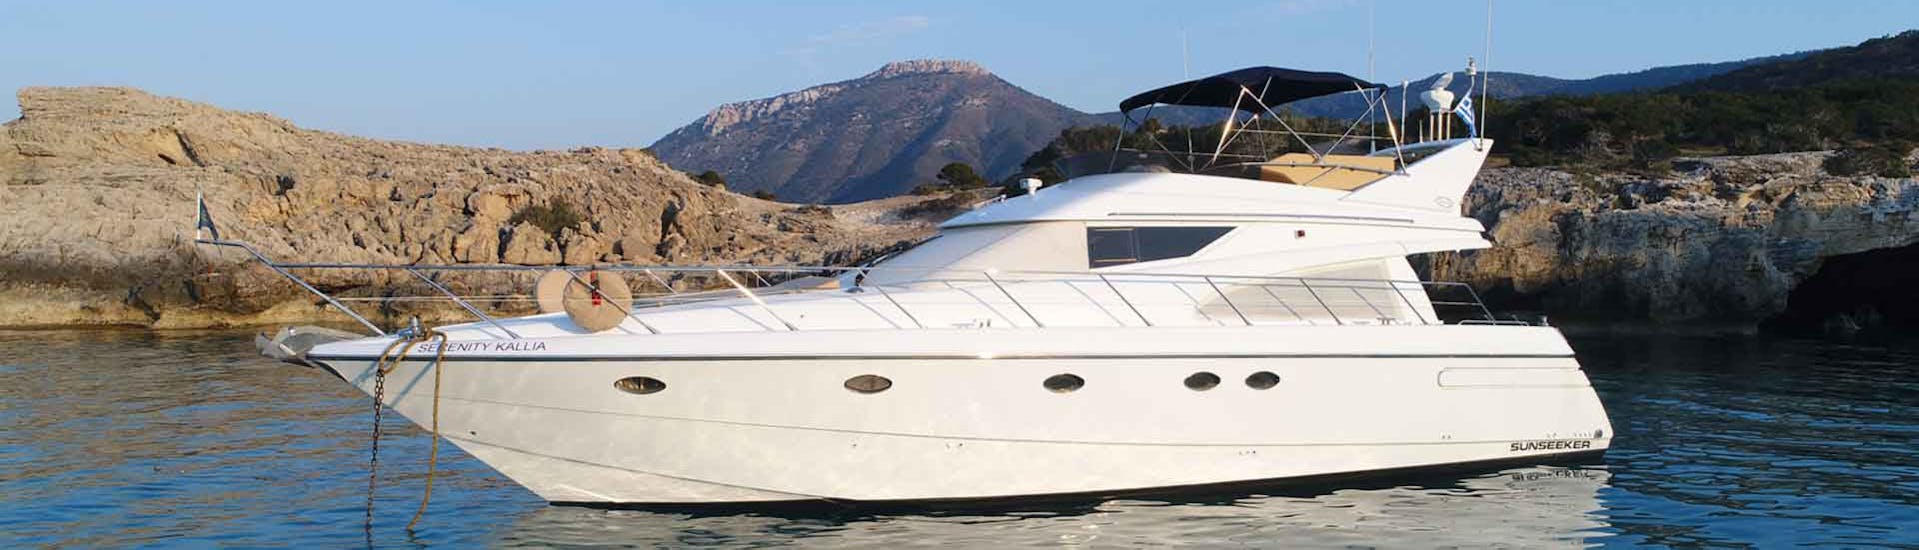 Private Luxus-Bootstour entlang der Akamas-Küste ab Latchi.